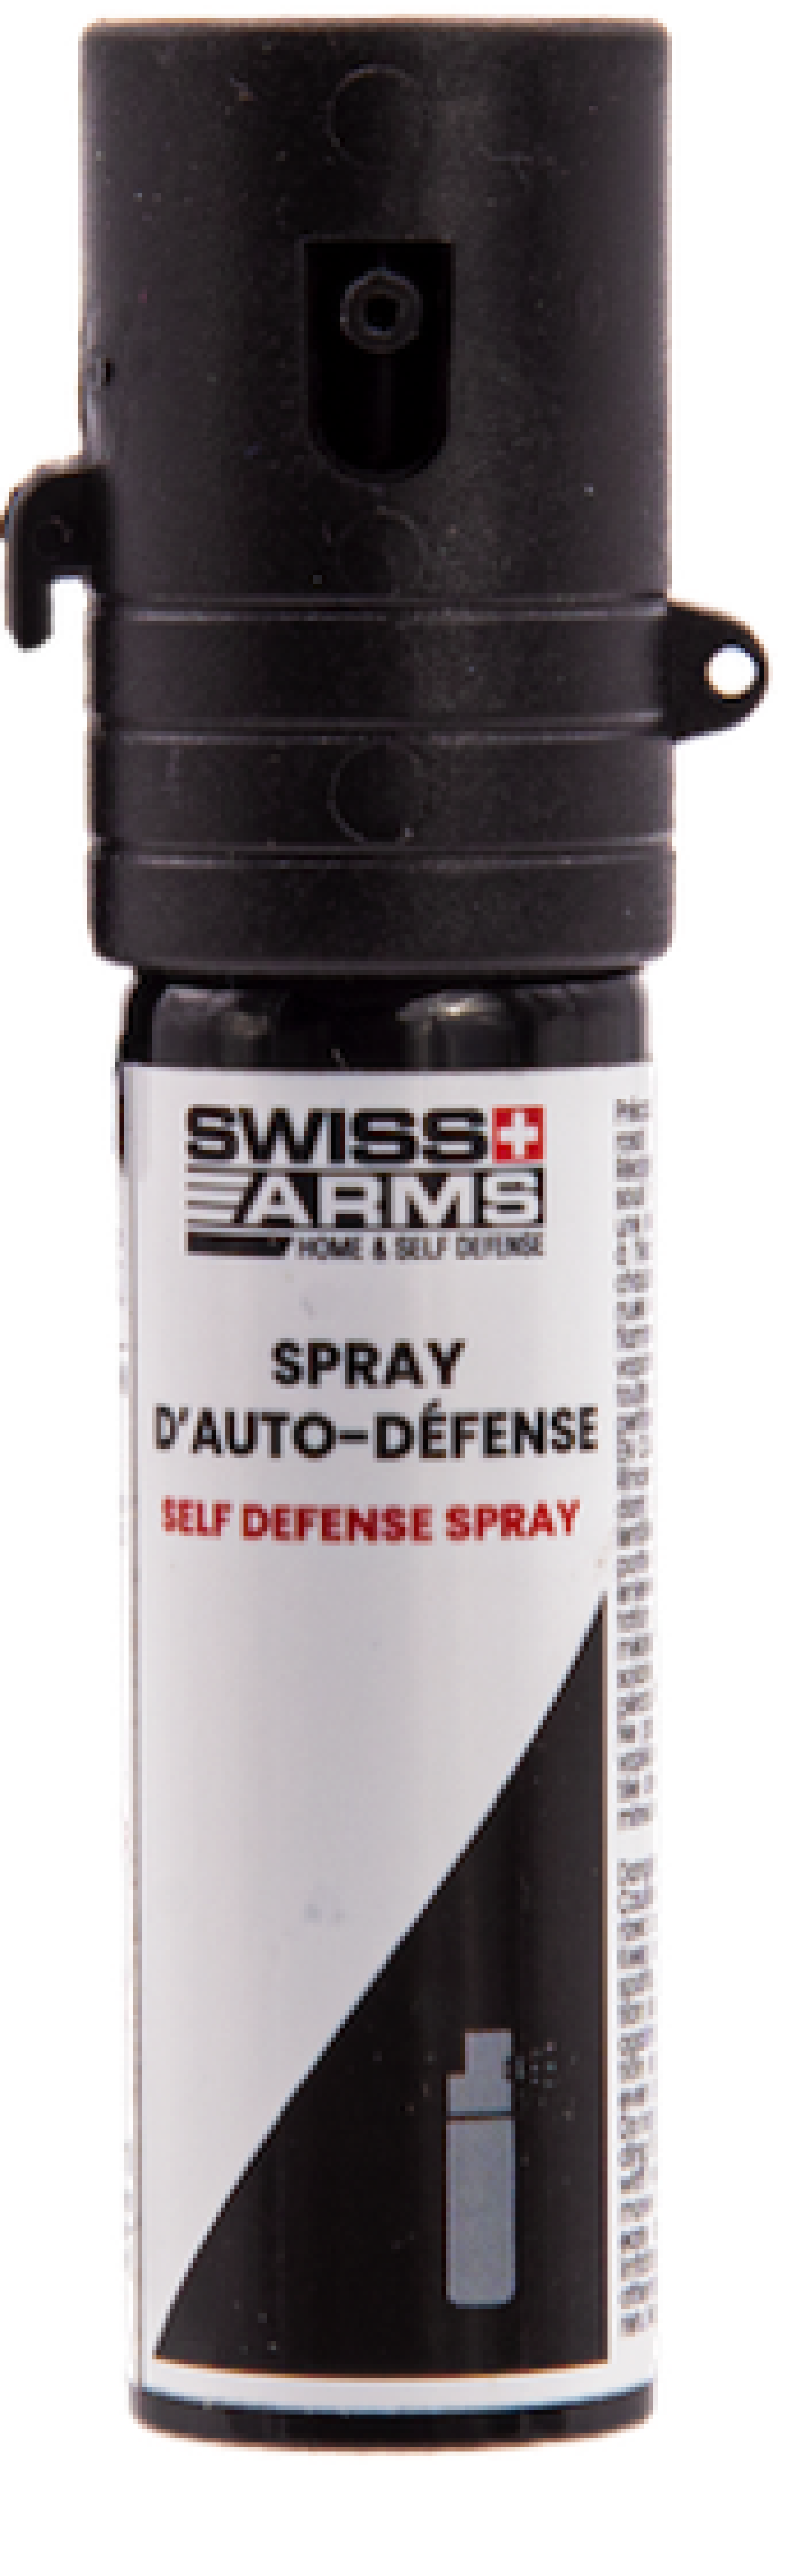 Swiss Arms Self Defense Spray 18 ml (01818)